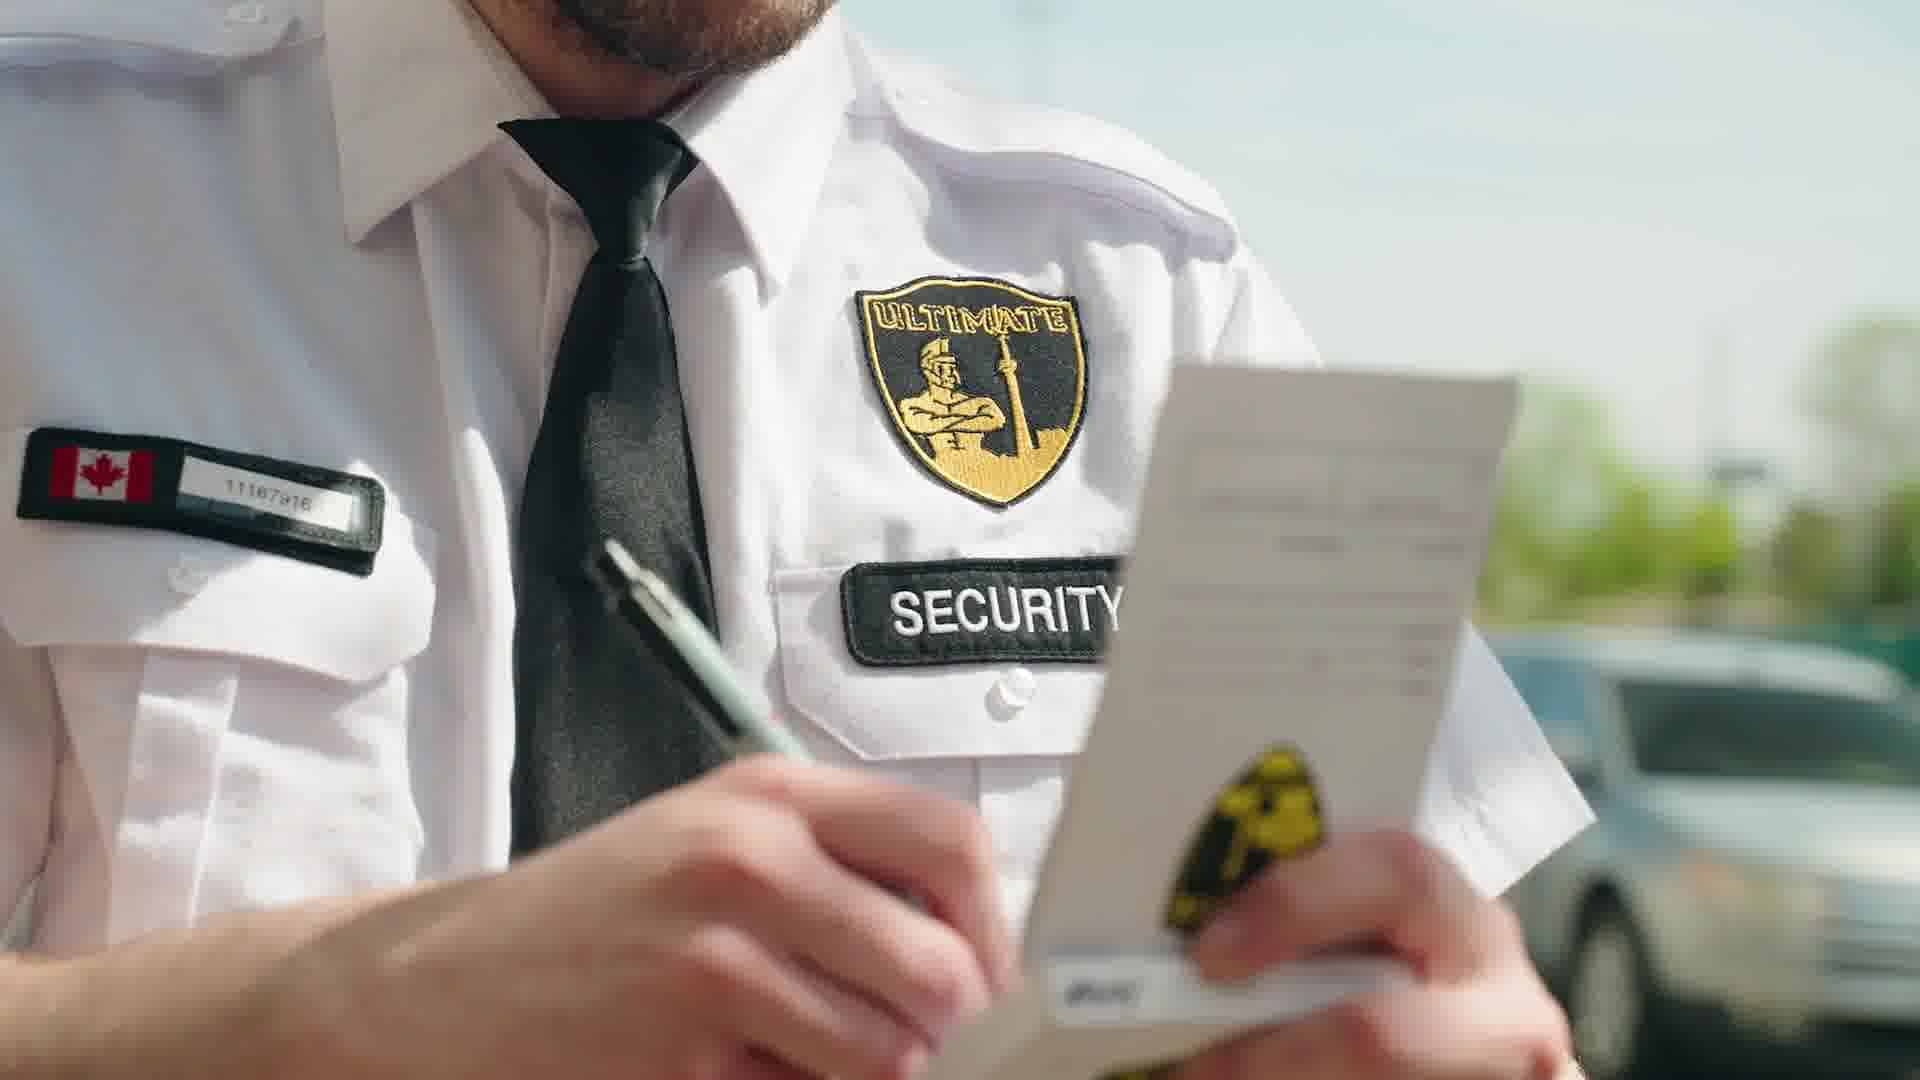 Ultimate Security 176